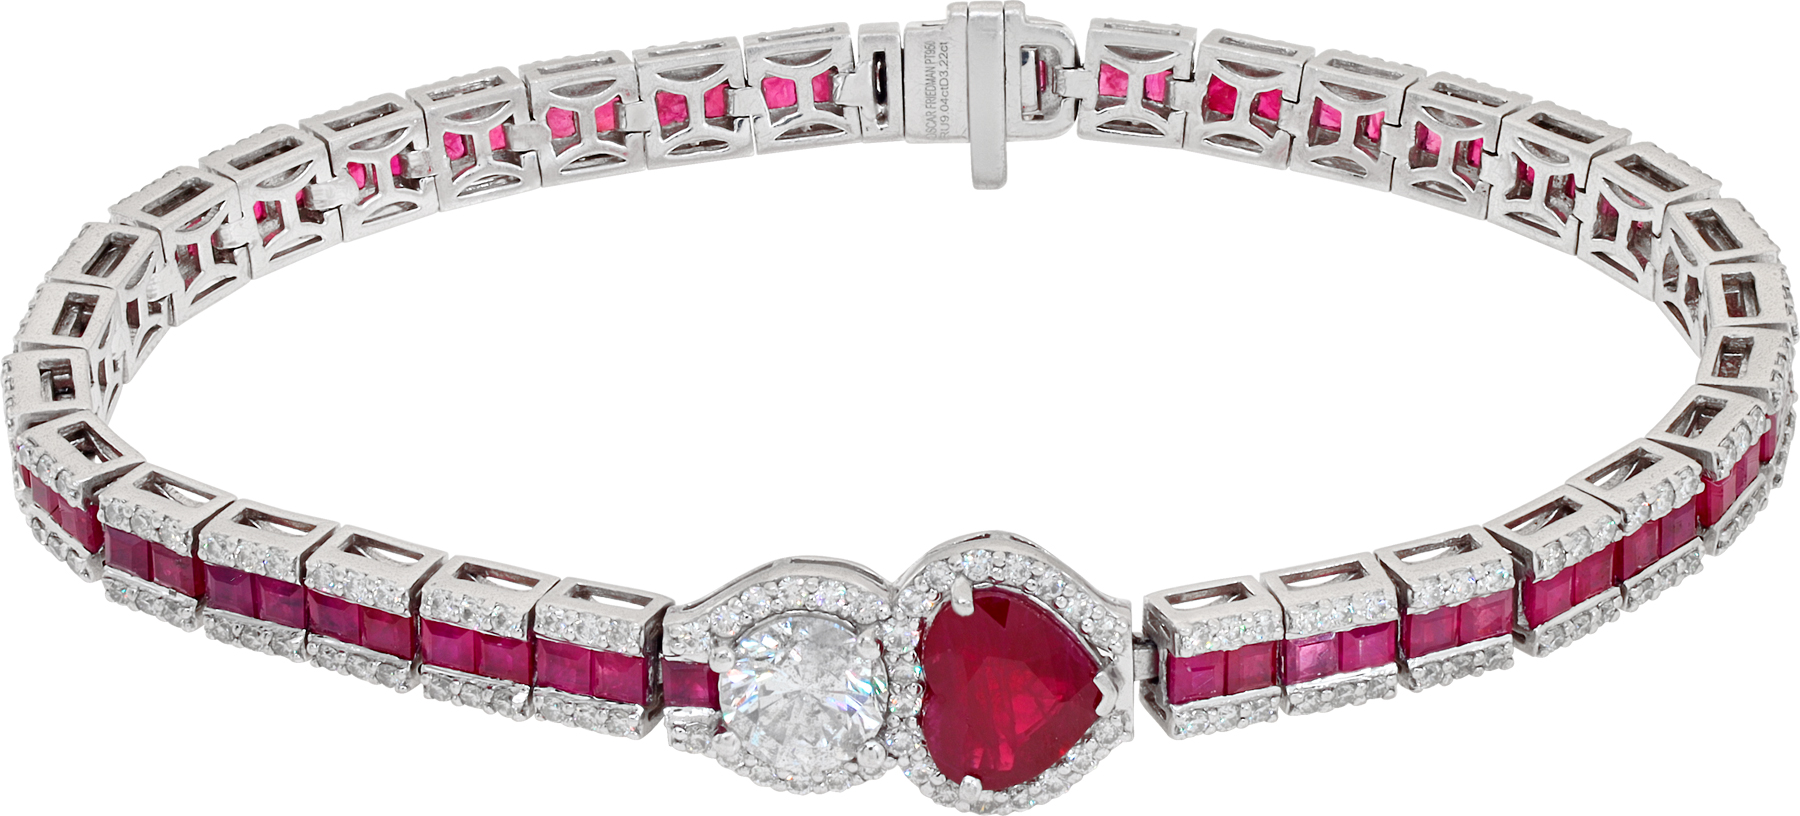 Burmese ruby corundum and diamond bracelet set in platinum.